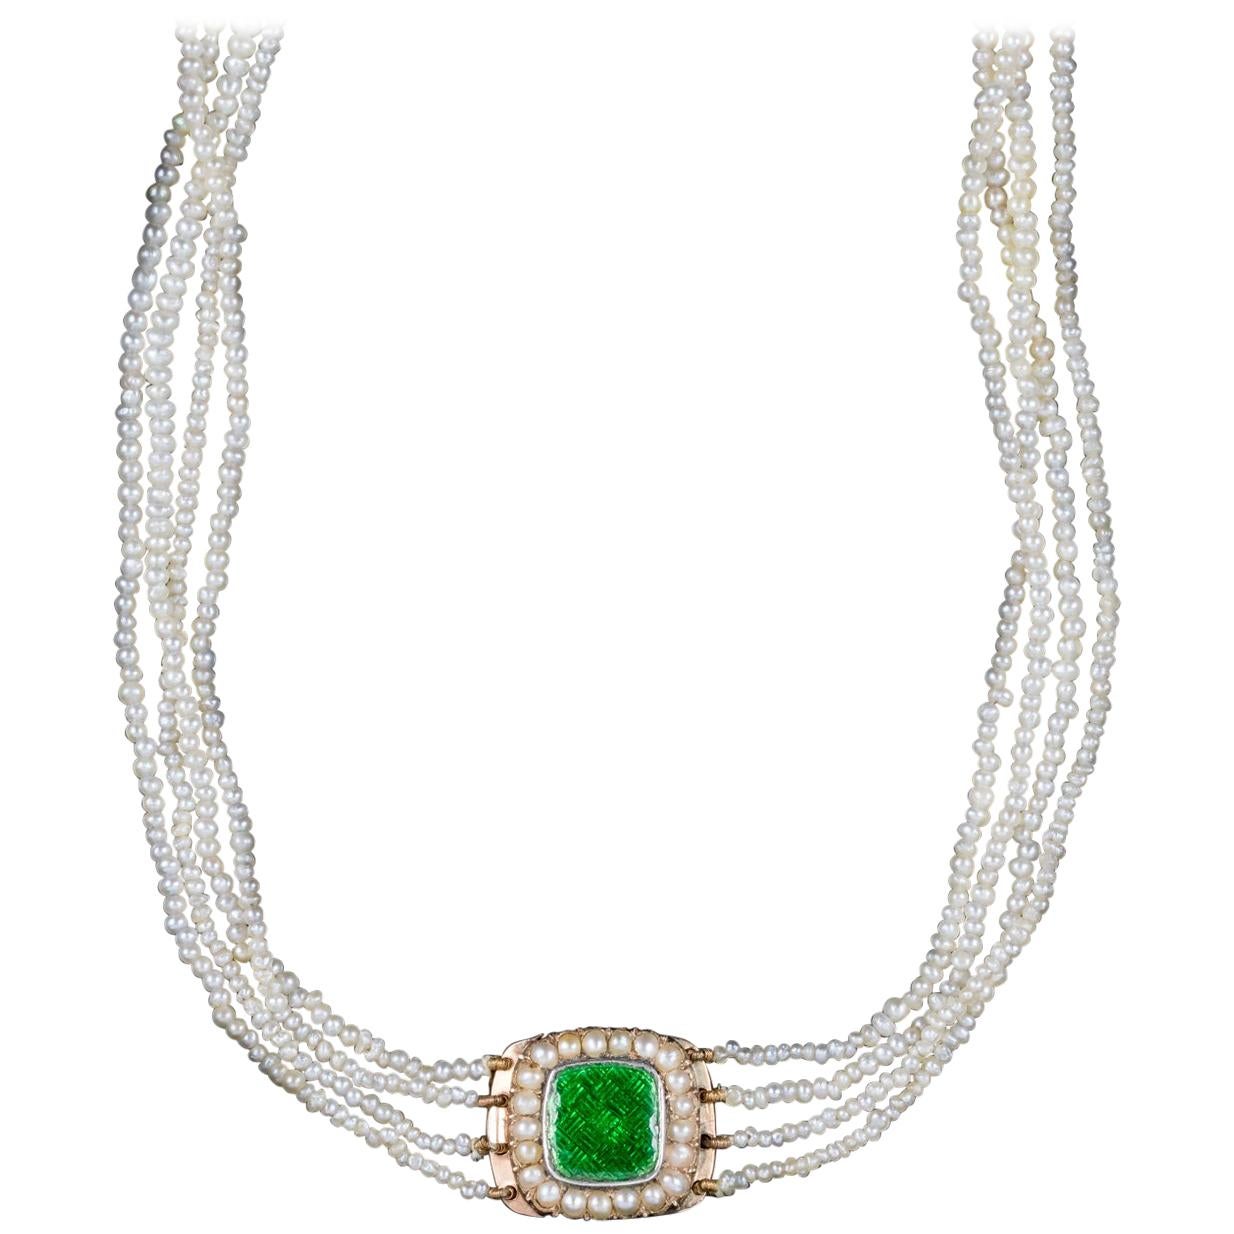 Antique Georgian Pearl Necklace Green Enamel Clasp 9 Carat Gold, circa 1800